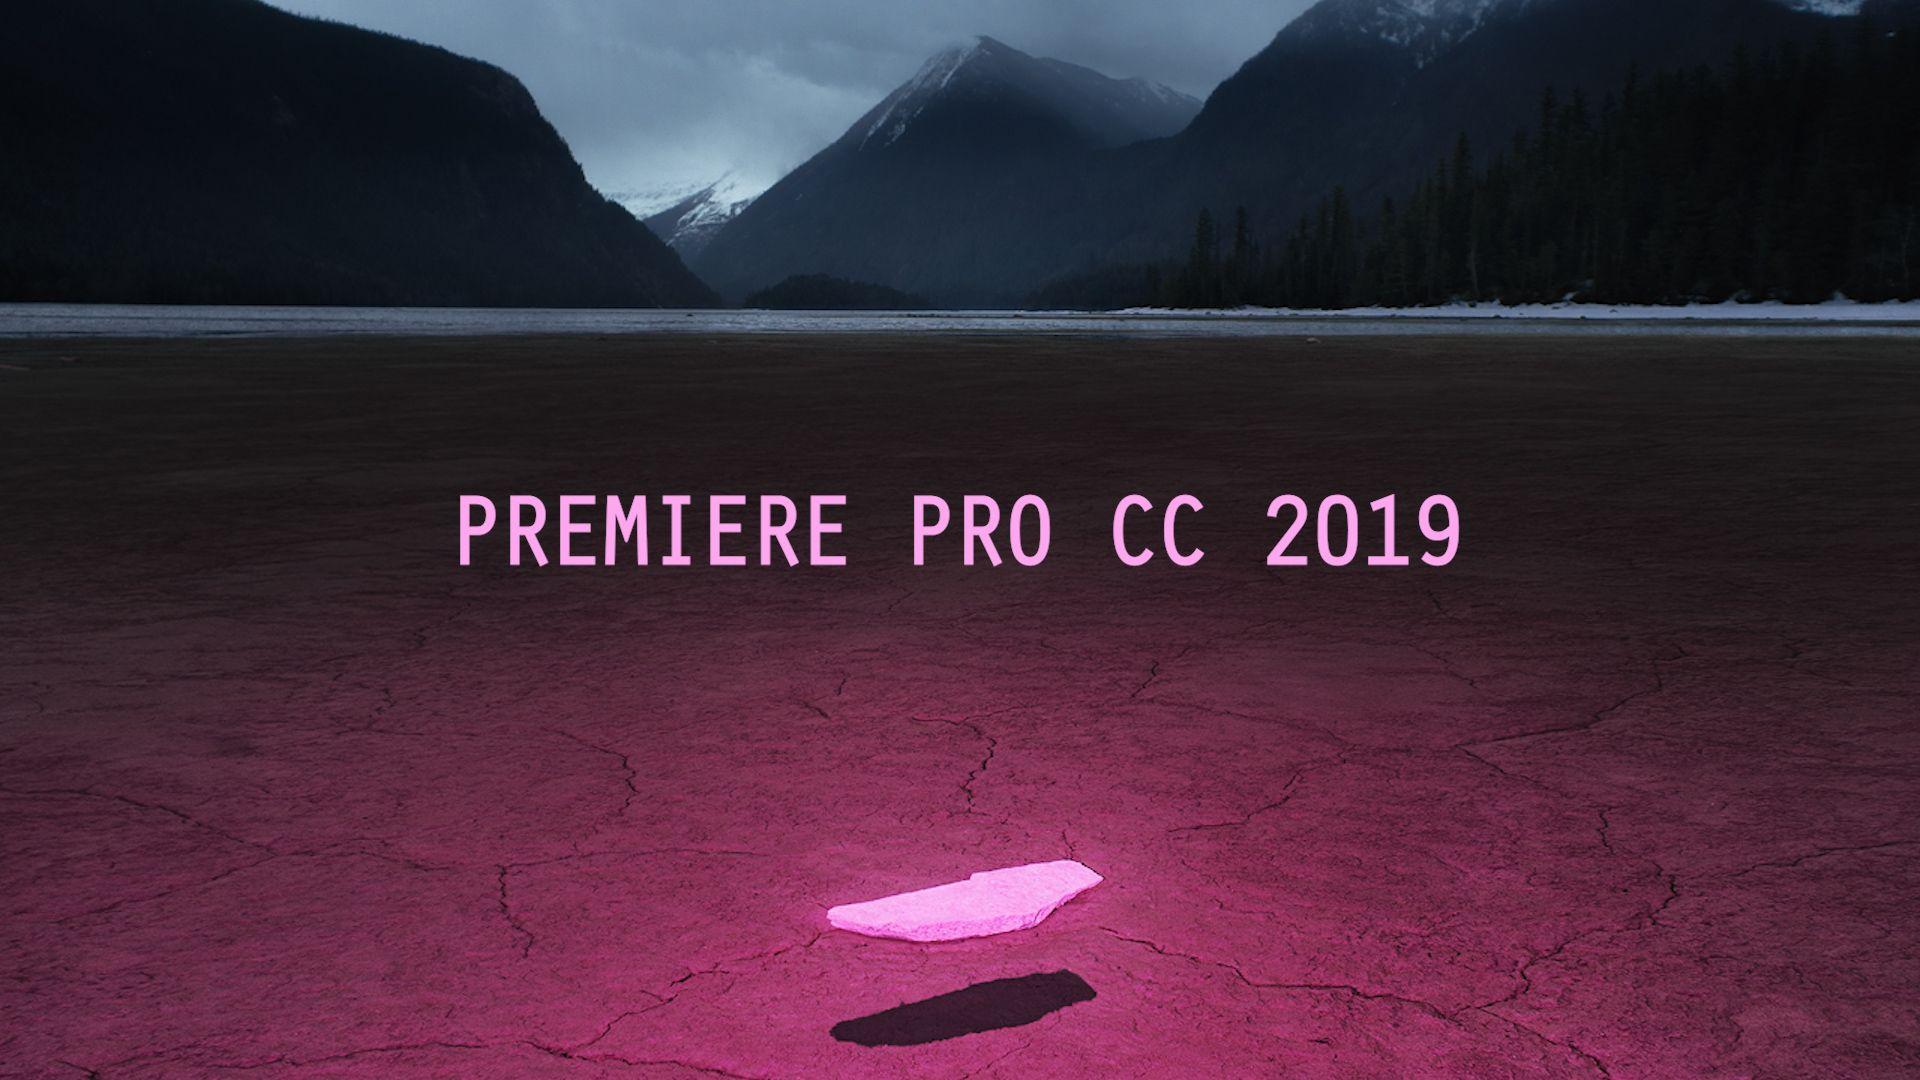 Adobe Premiere Pro 2024 v24.0.0.58 for apple download free